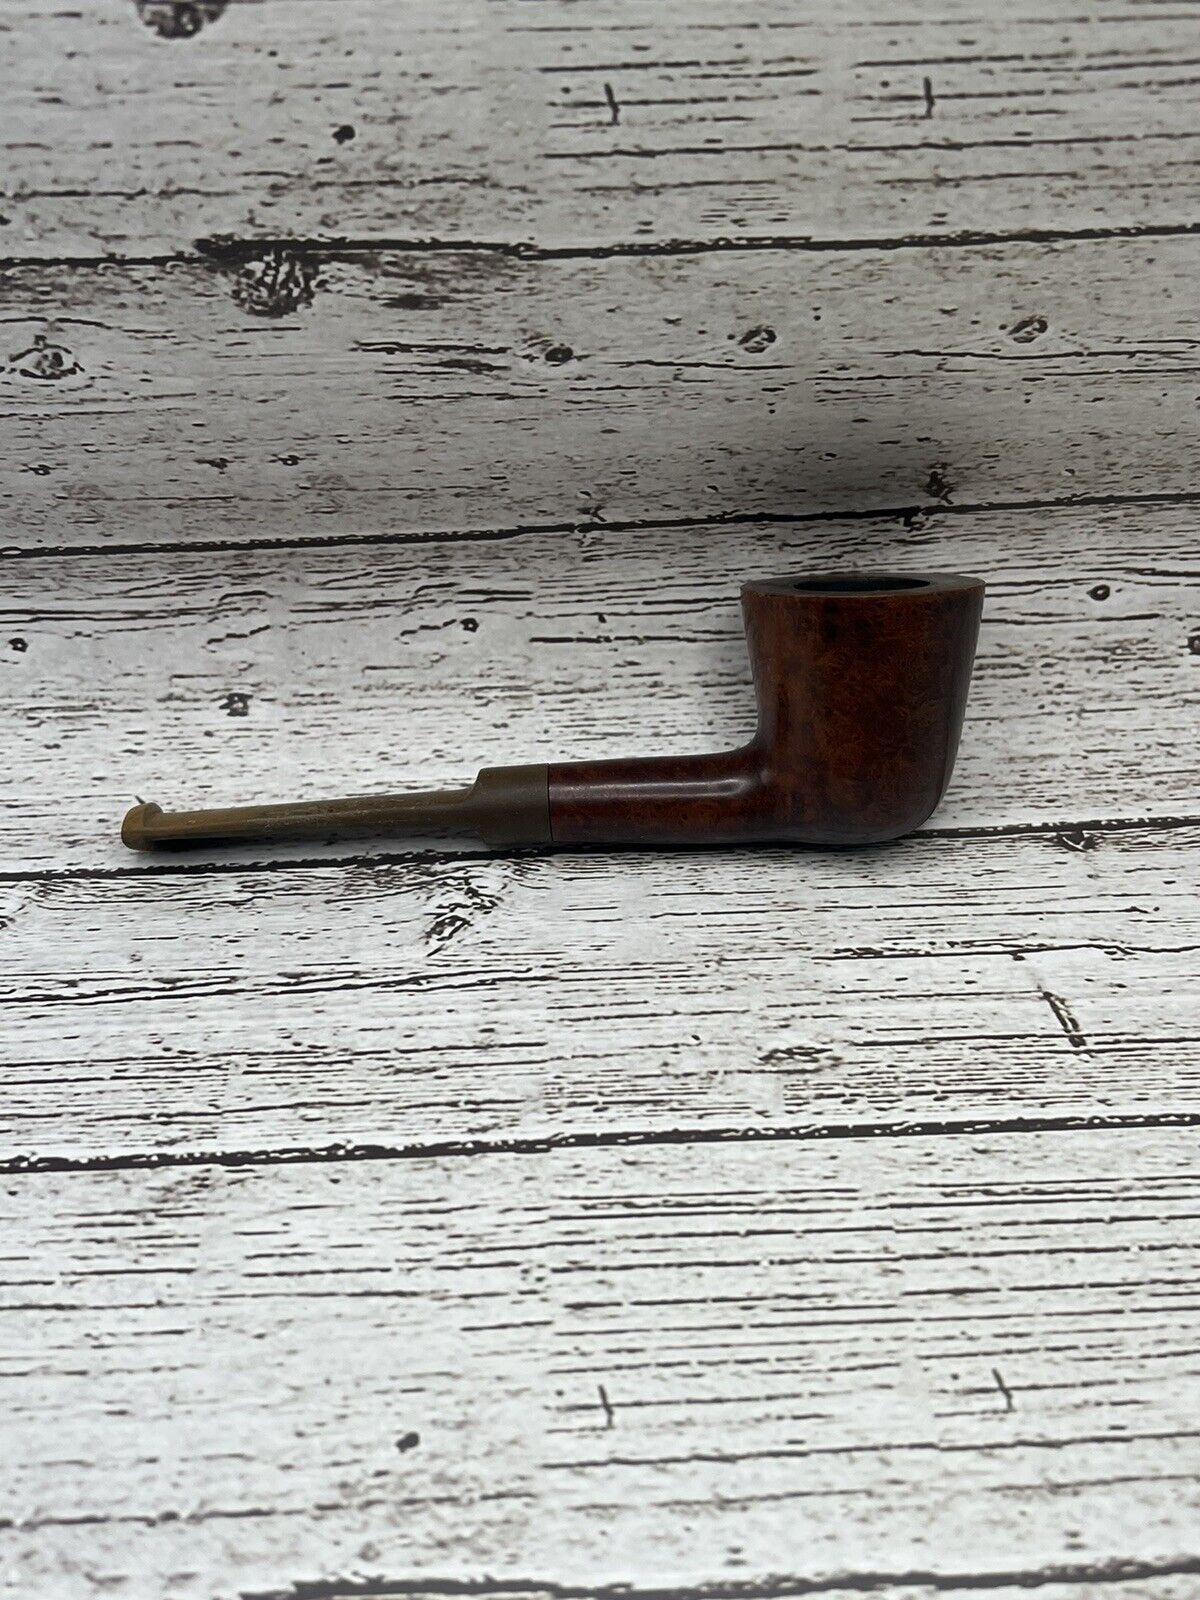 The Tinder Box Unique Tobacco Smoking Pipe - Vintage England